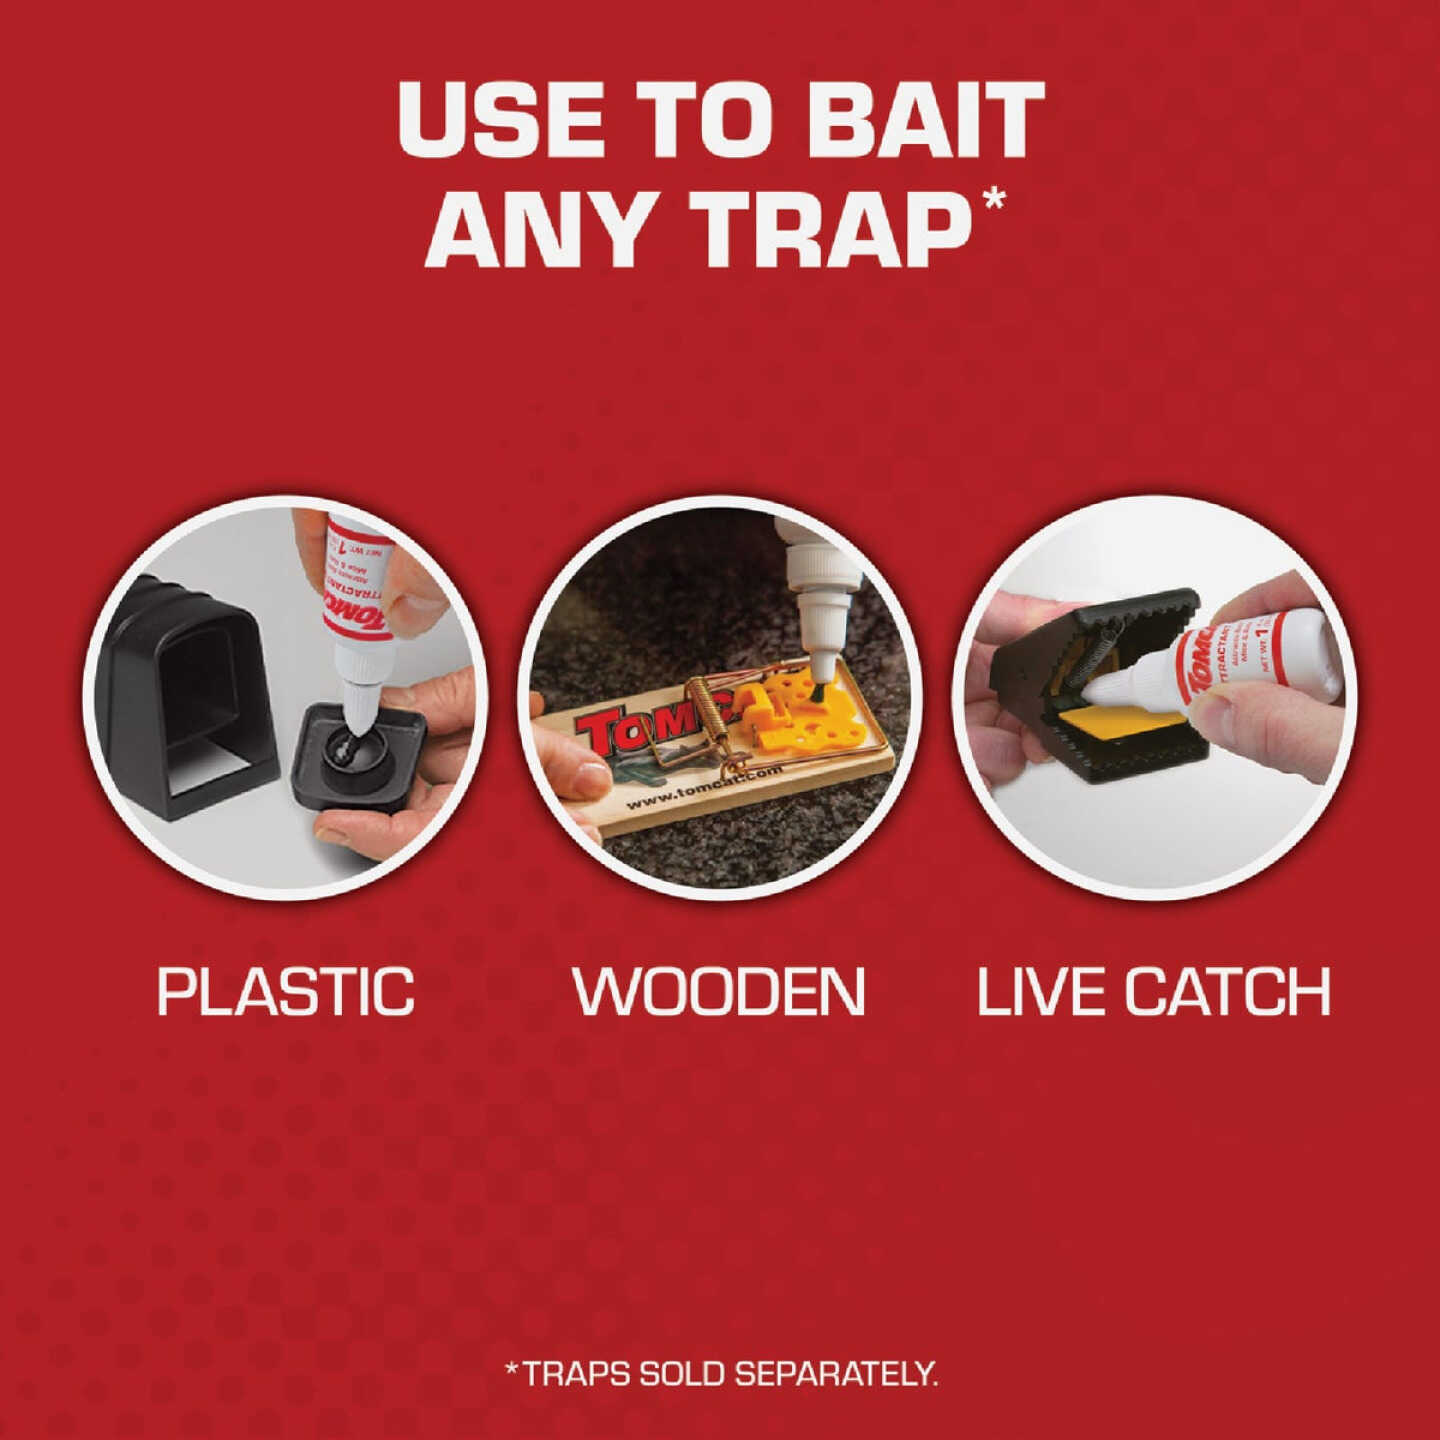 Tomcat® Multi-Catch Mouse Trap